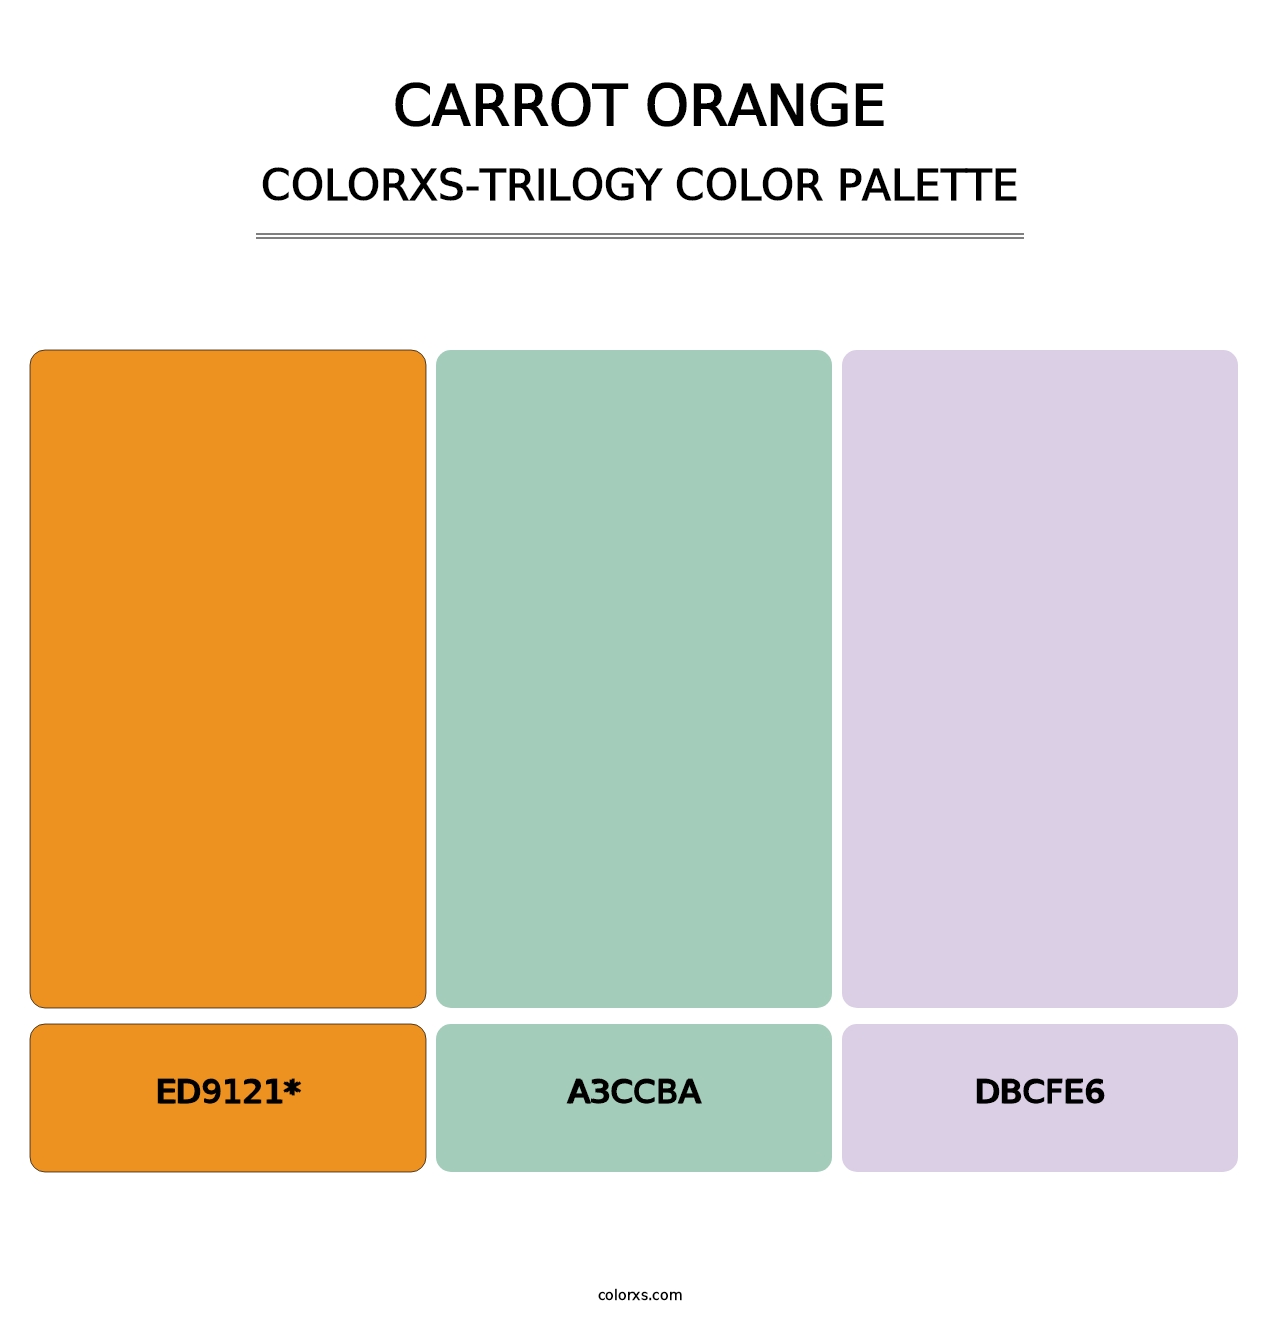 Carrot Orange - Colorxs Trilogy Palette